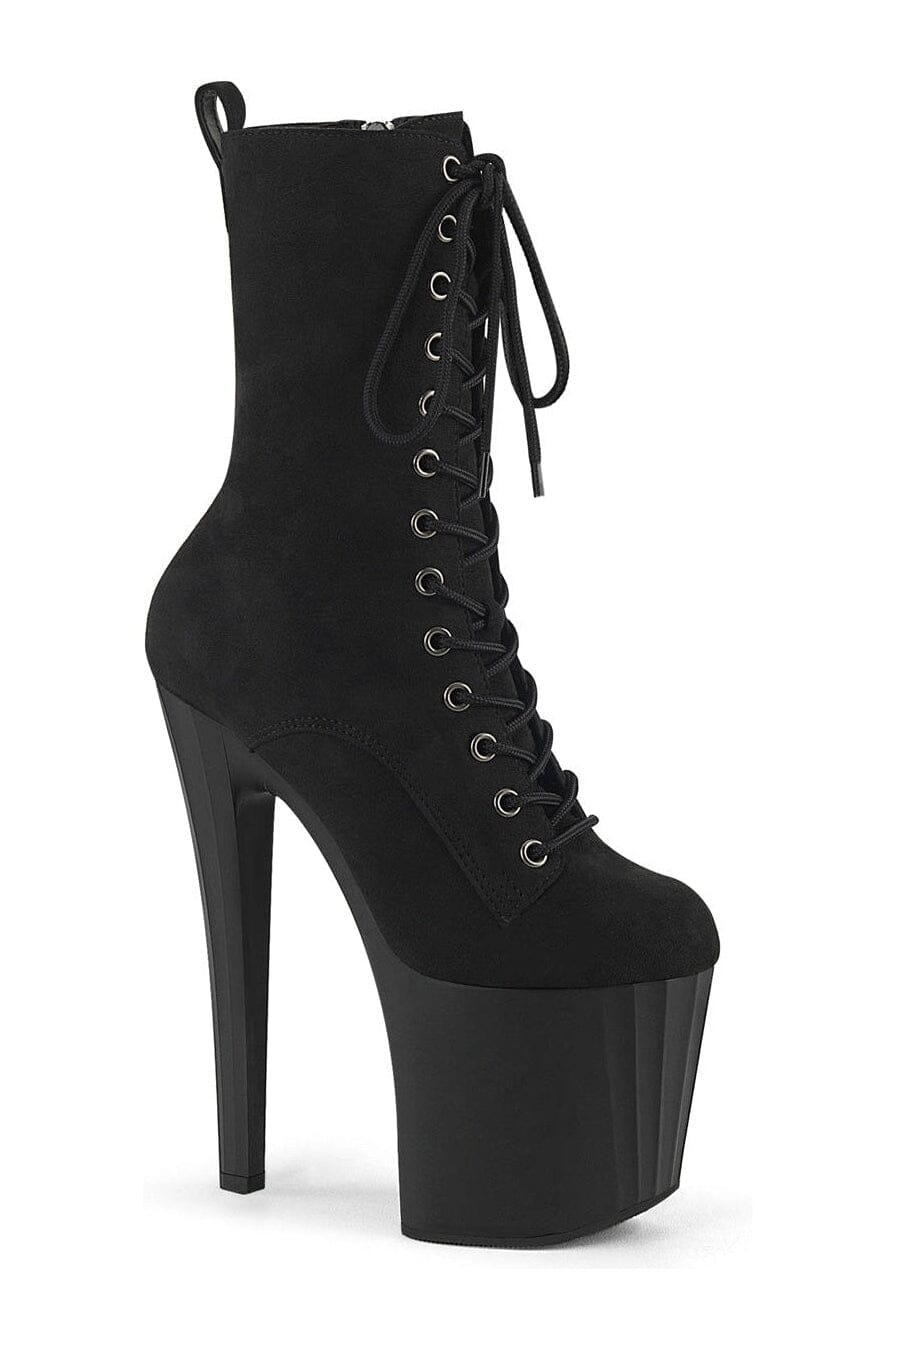 ENCHANT-1040 Black Faux Suede Knee Boot-Knee Boots-Pleaser-Black-10-Faux Suede-SEXYSHOES.COM